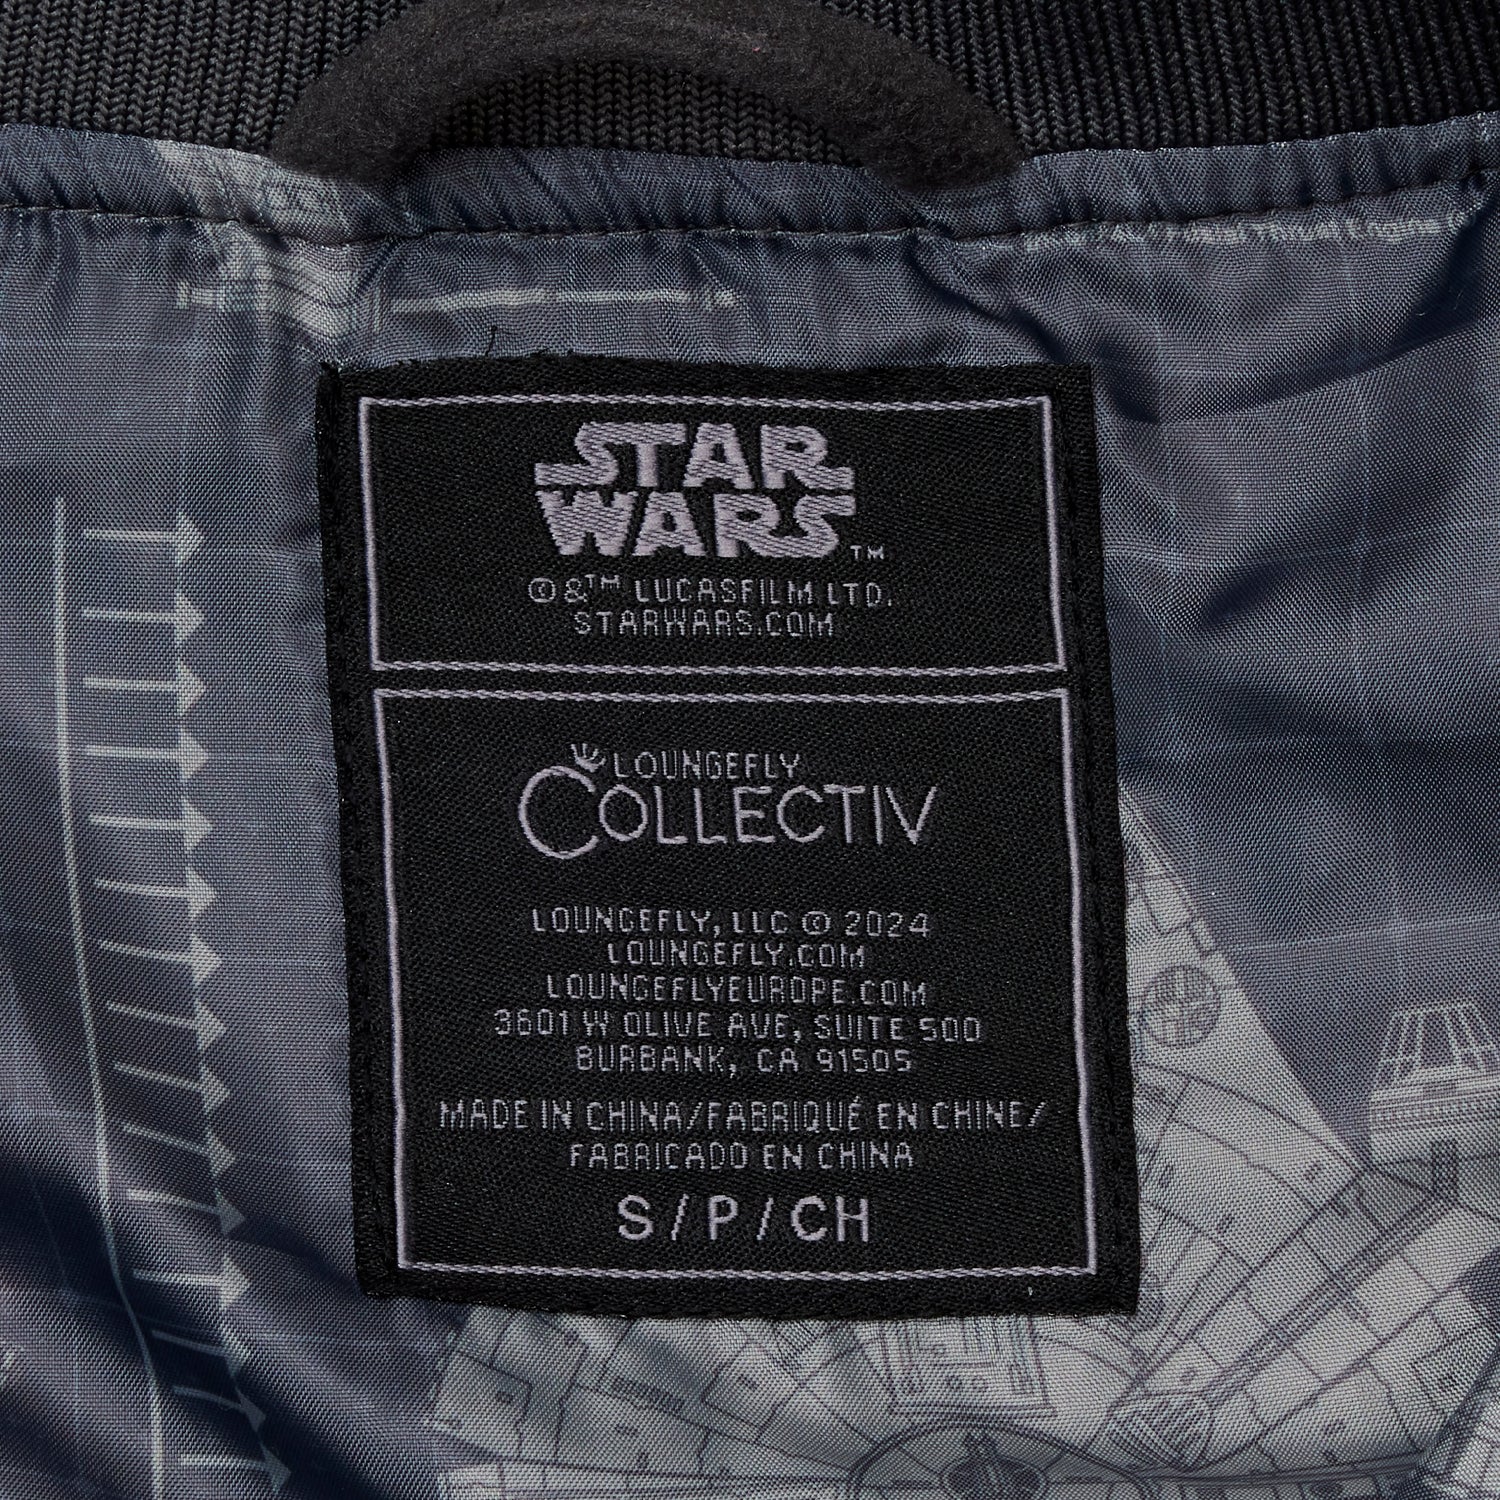 Loungefly Collectiv x Star Wars Rebel Alliance Varsity Jacket